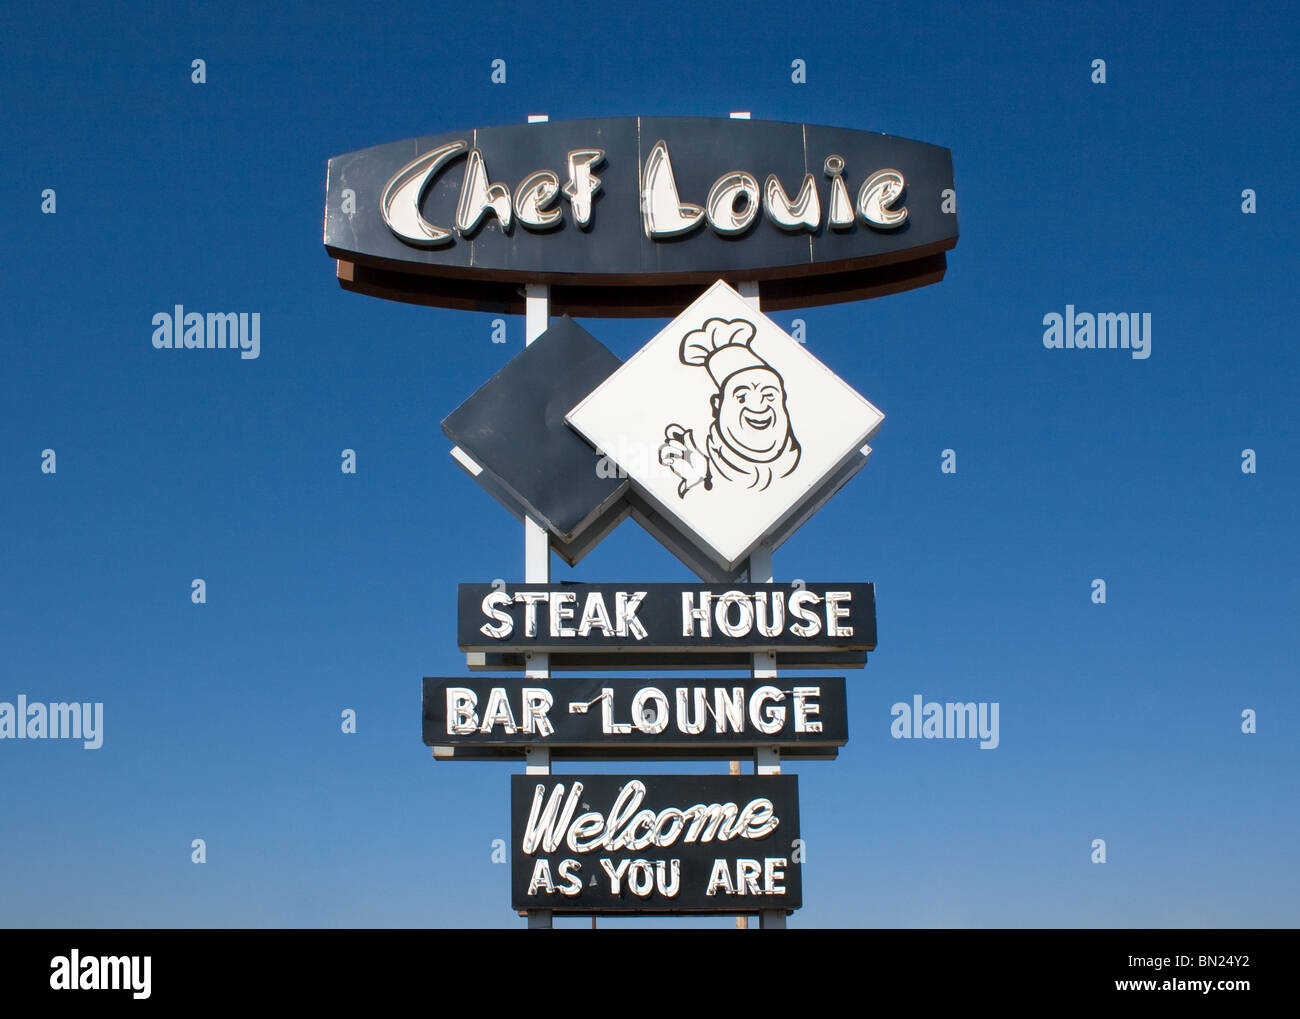 Chef Louie Steak House sign in Mitchell South Dakota Stock Photo